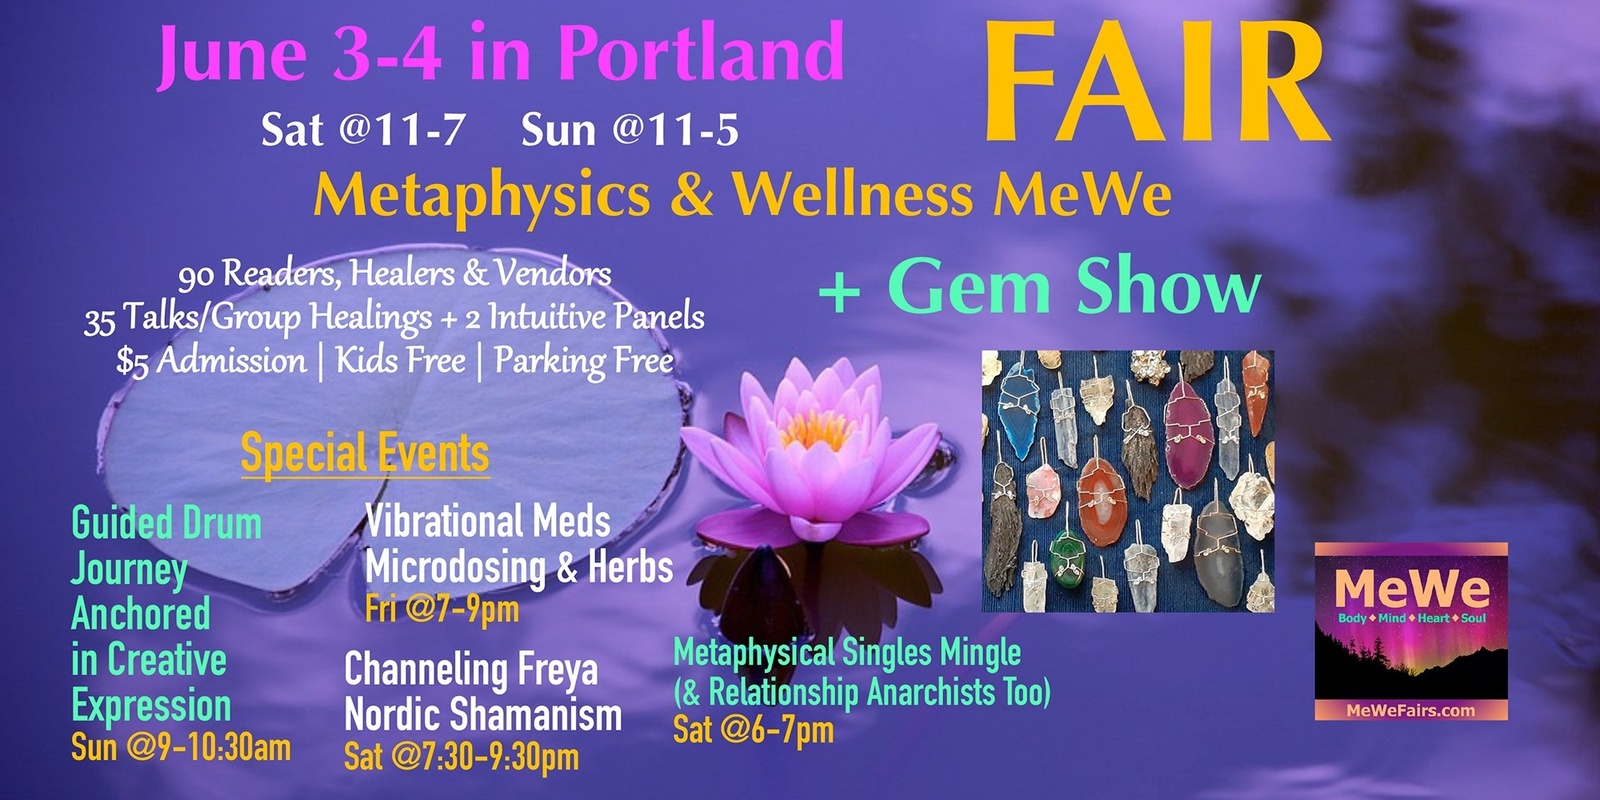 MeWe Metaphysics & Wellness Fair + Gem Show in Portland, 90 Booths / 30 Talks ($5)